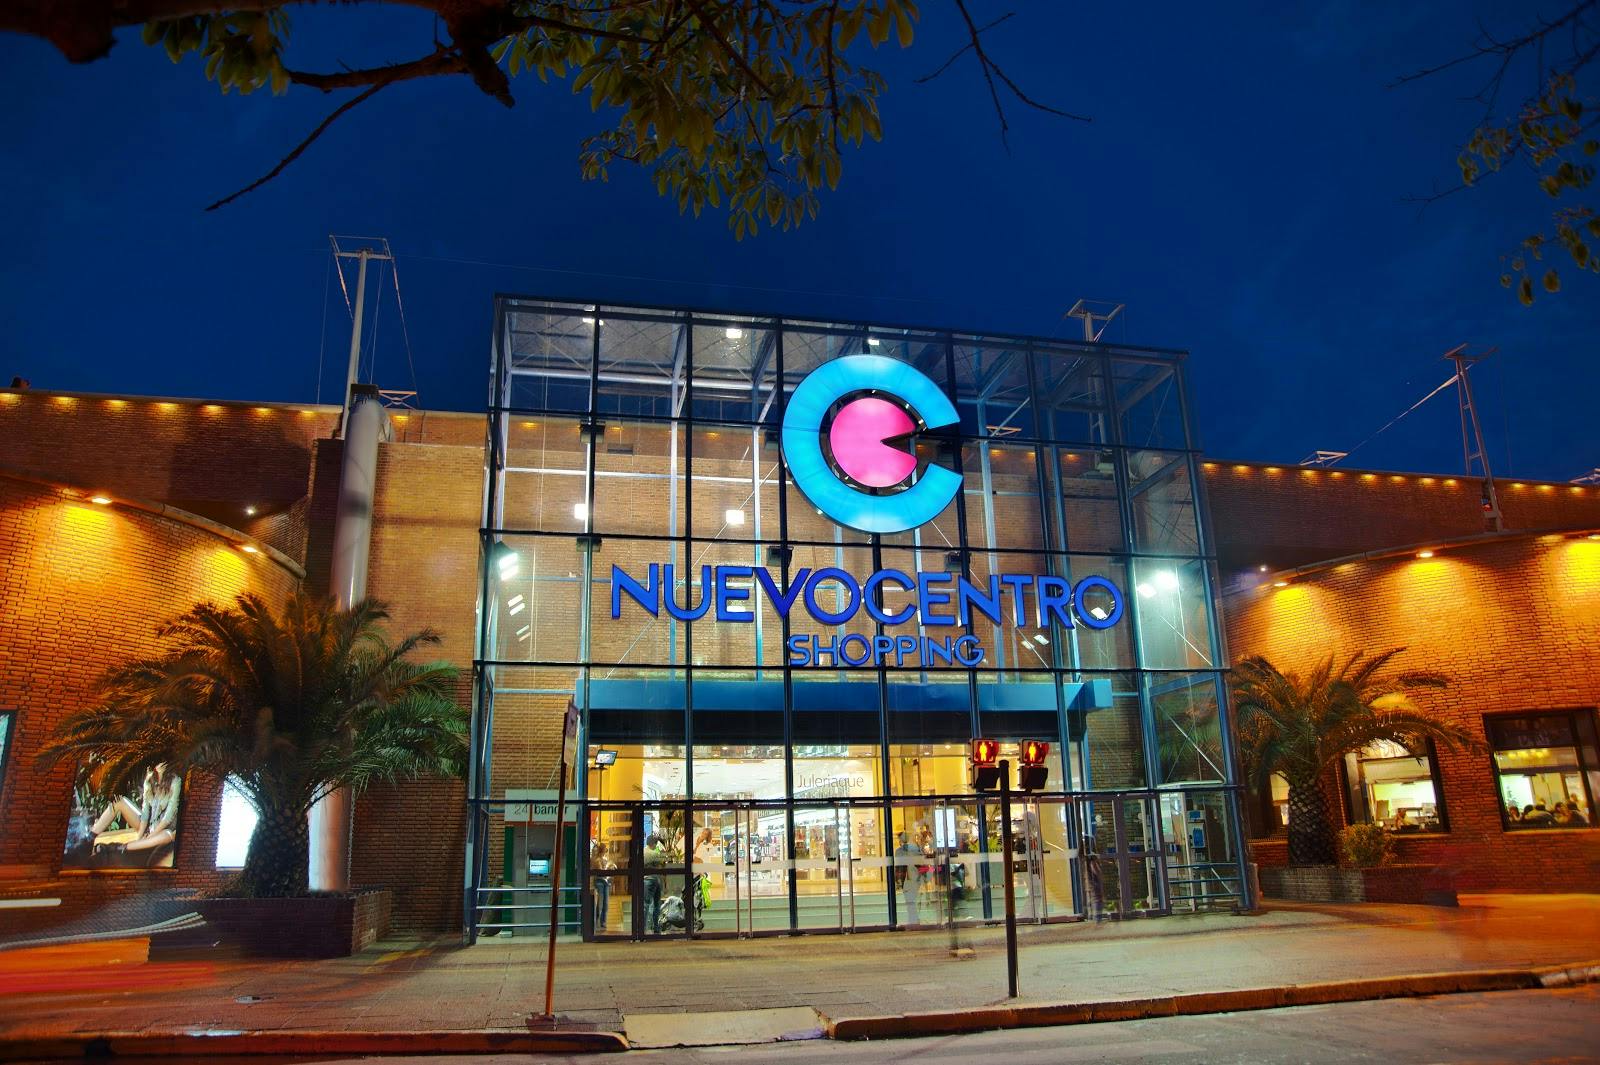 Image - Nuevocentro Shopping